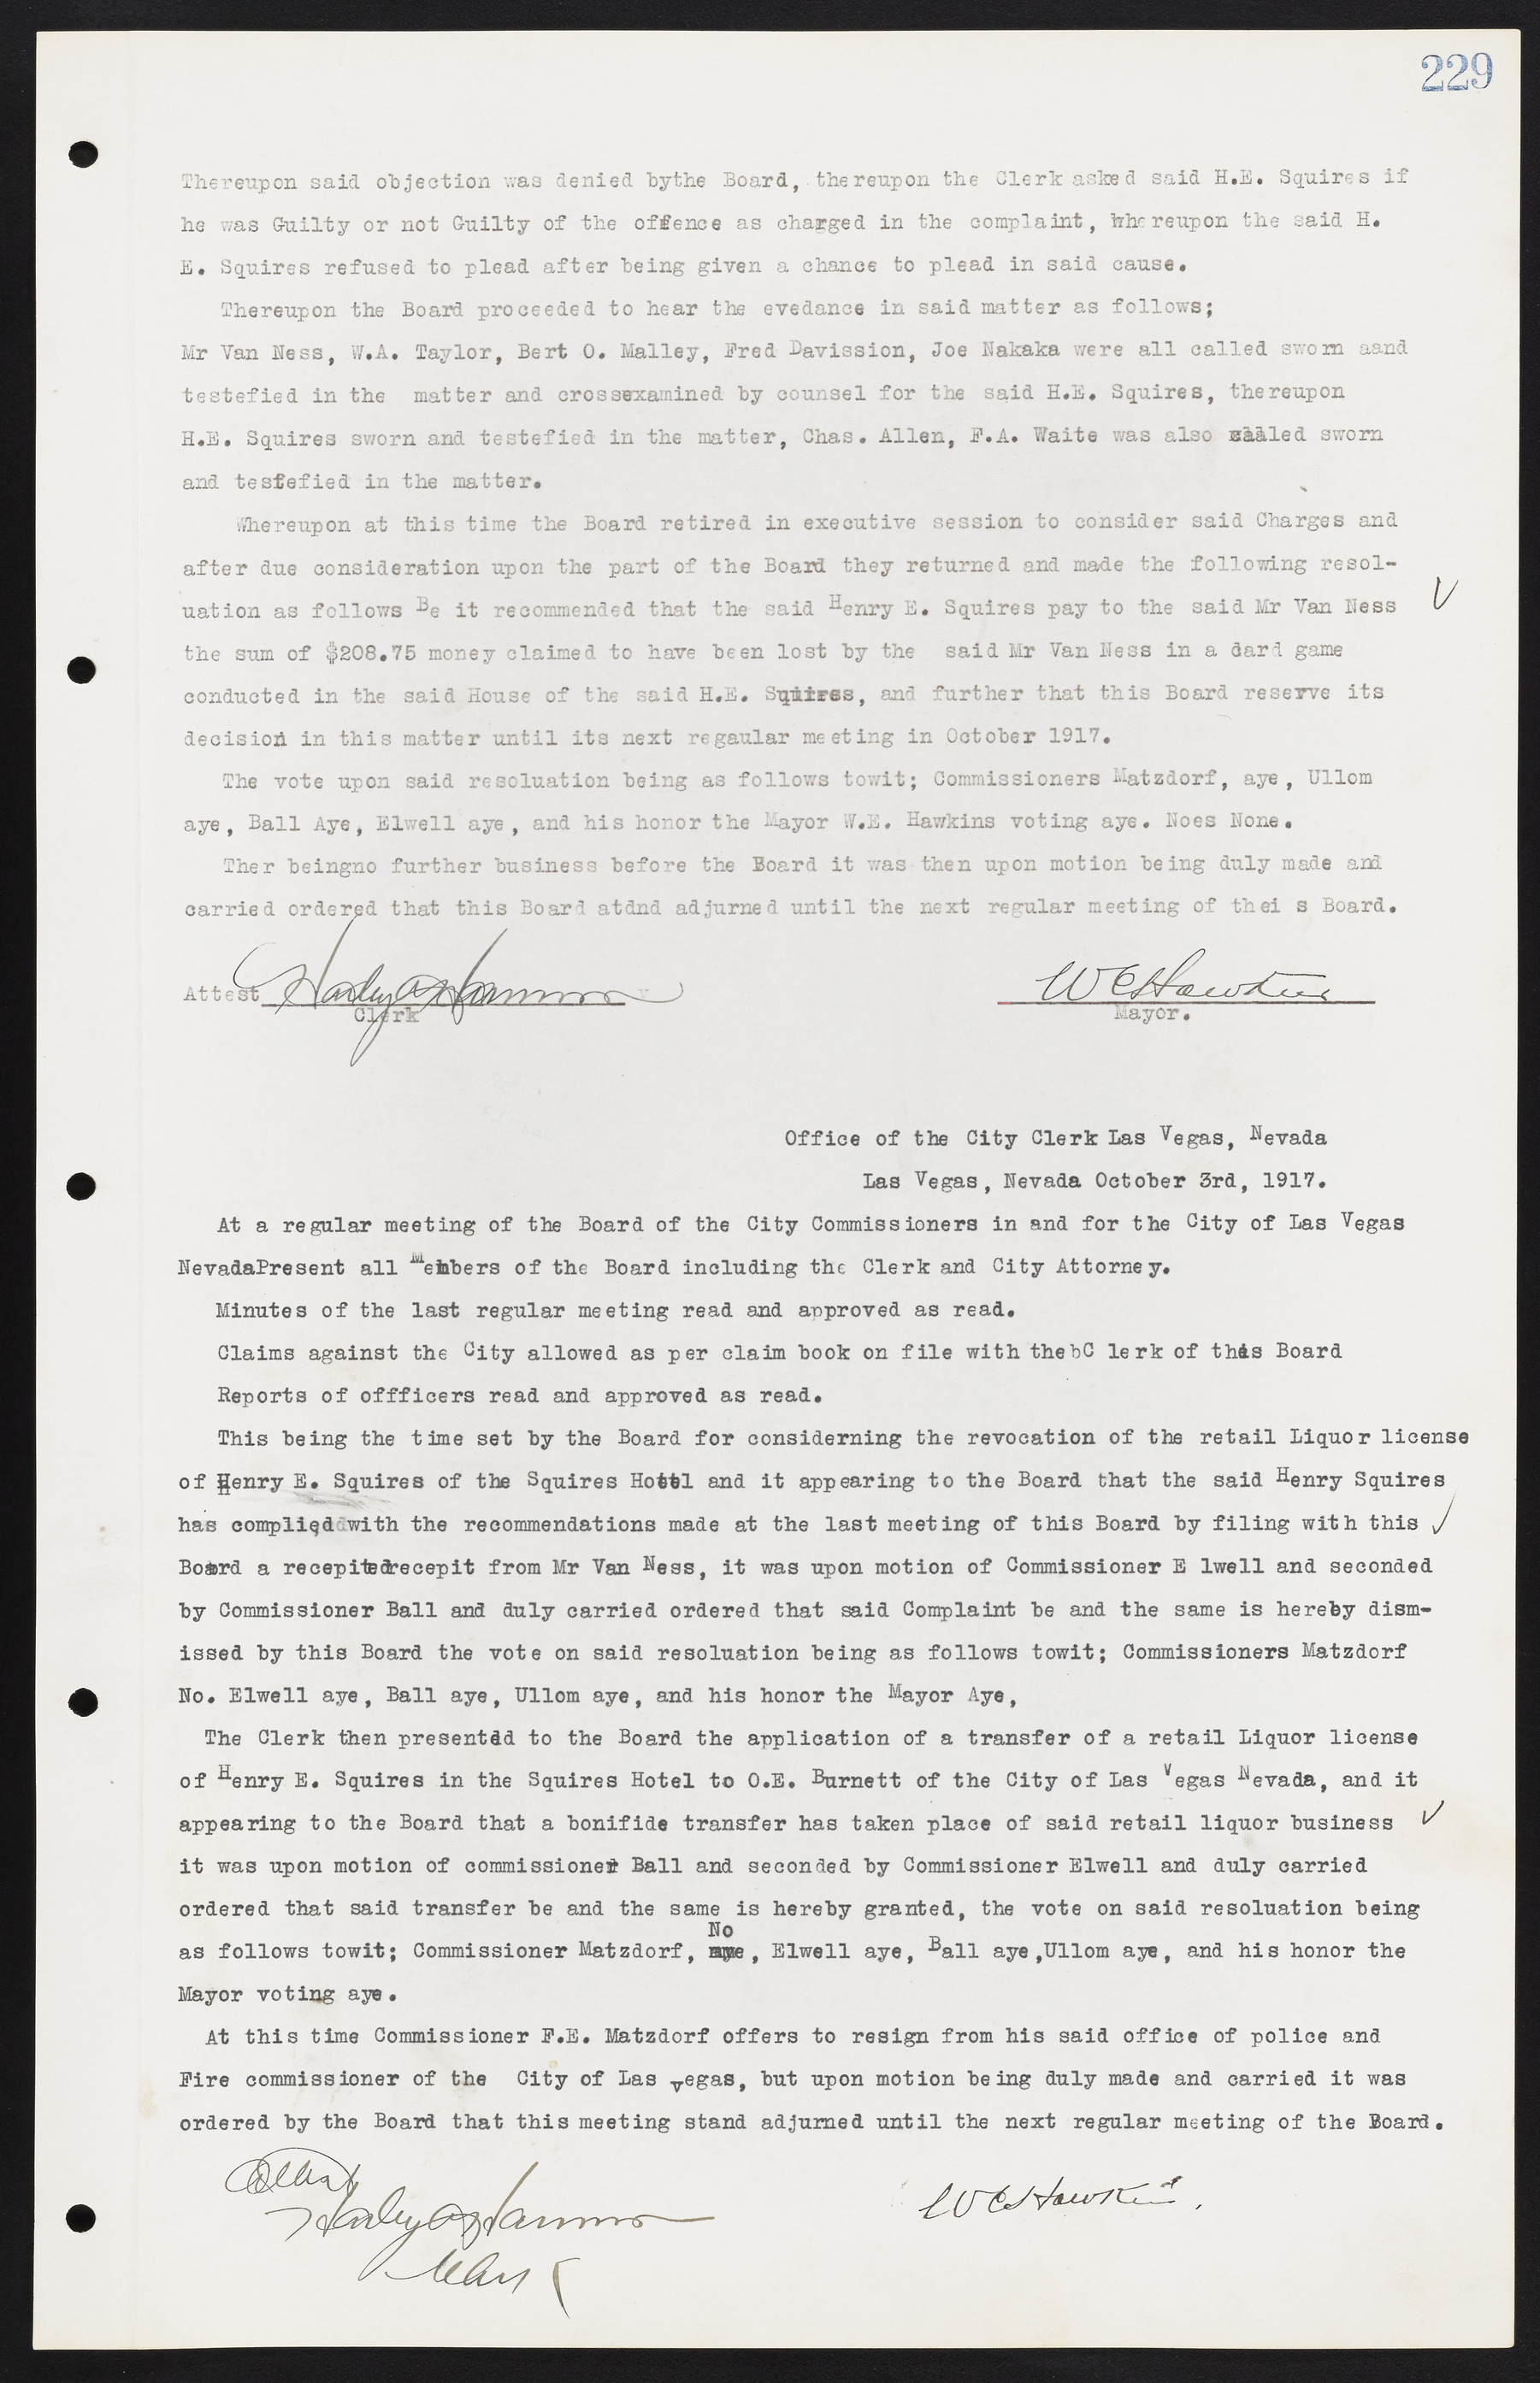 Las Vegas City Commission Minutes, June 22, 1911 to February 7, 1922, lvc000001-245